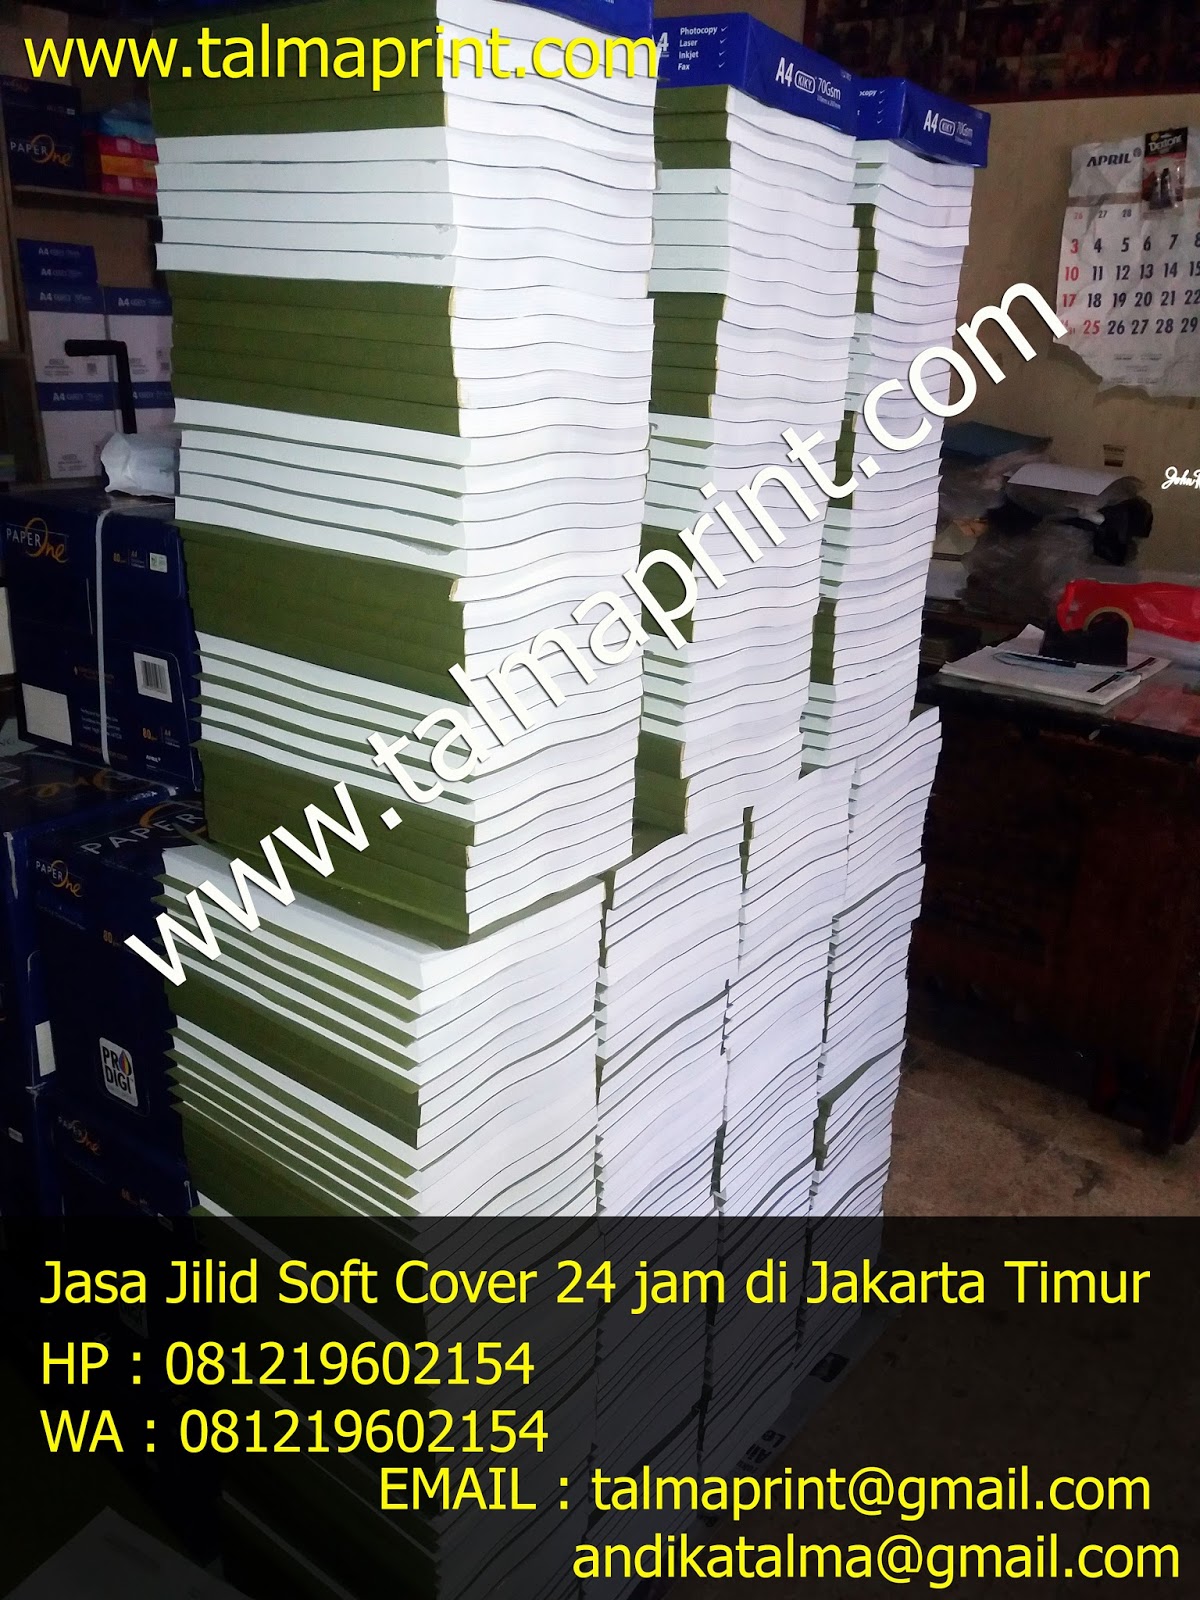 Tempat Jasa Jilid Soft Cover 24 Jam Di Jakarta Timur Bisa Ditunggu Talmaprint